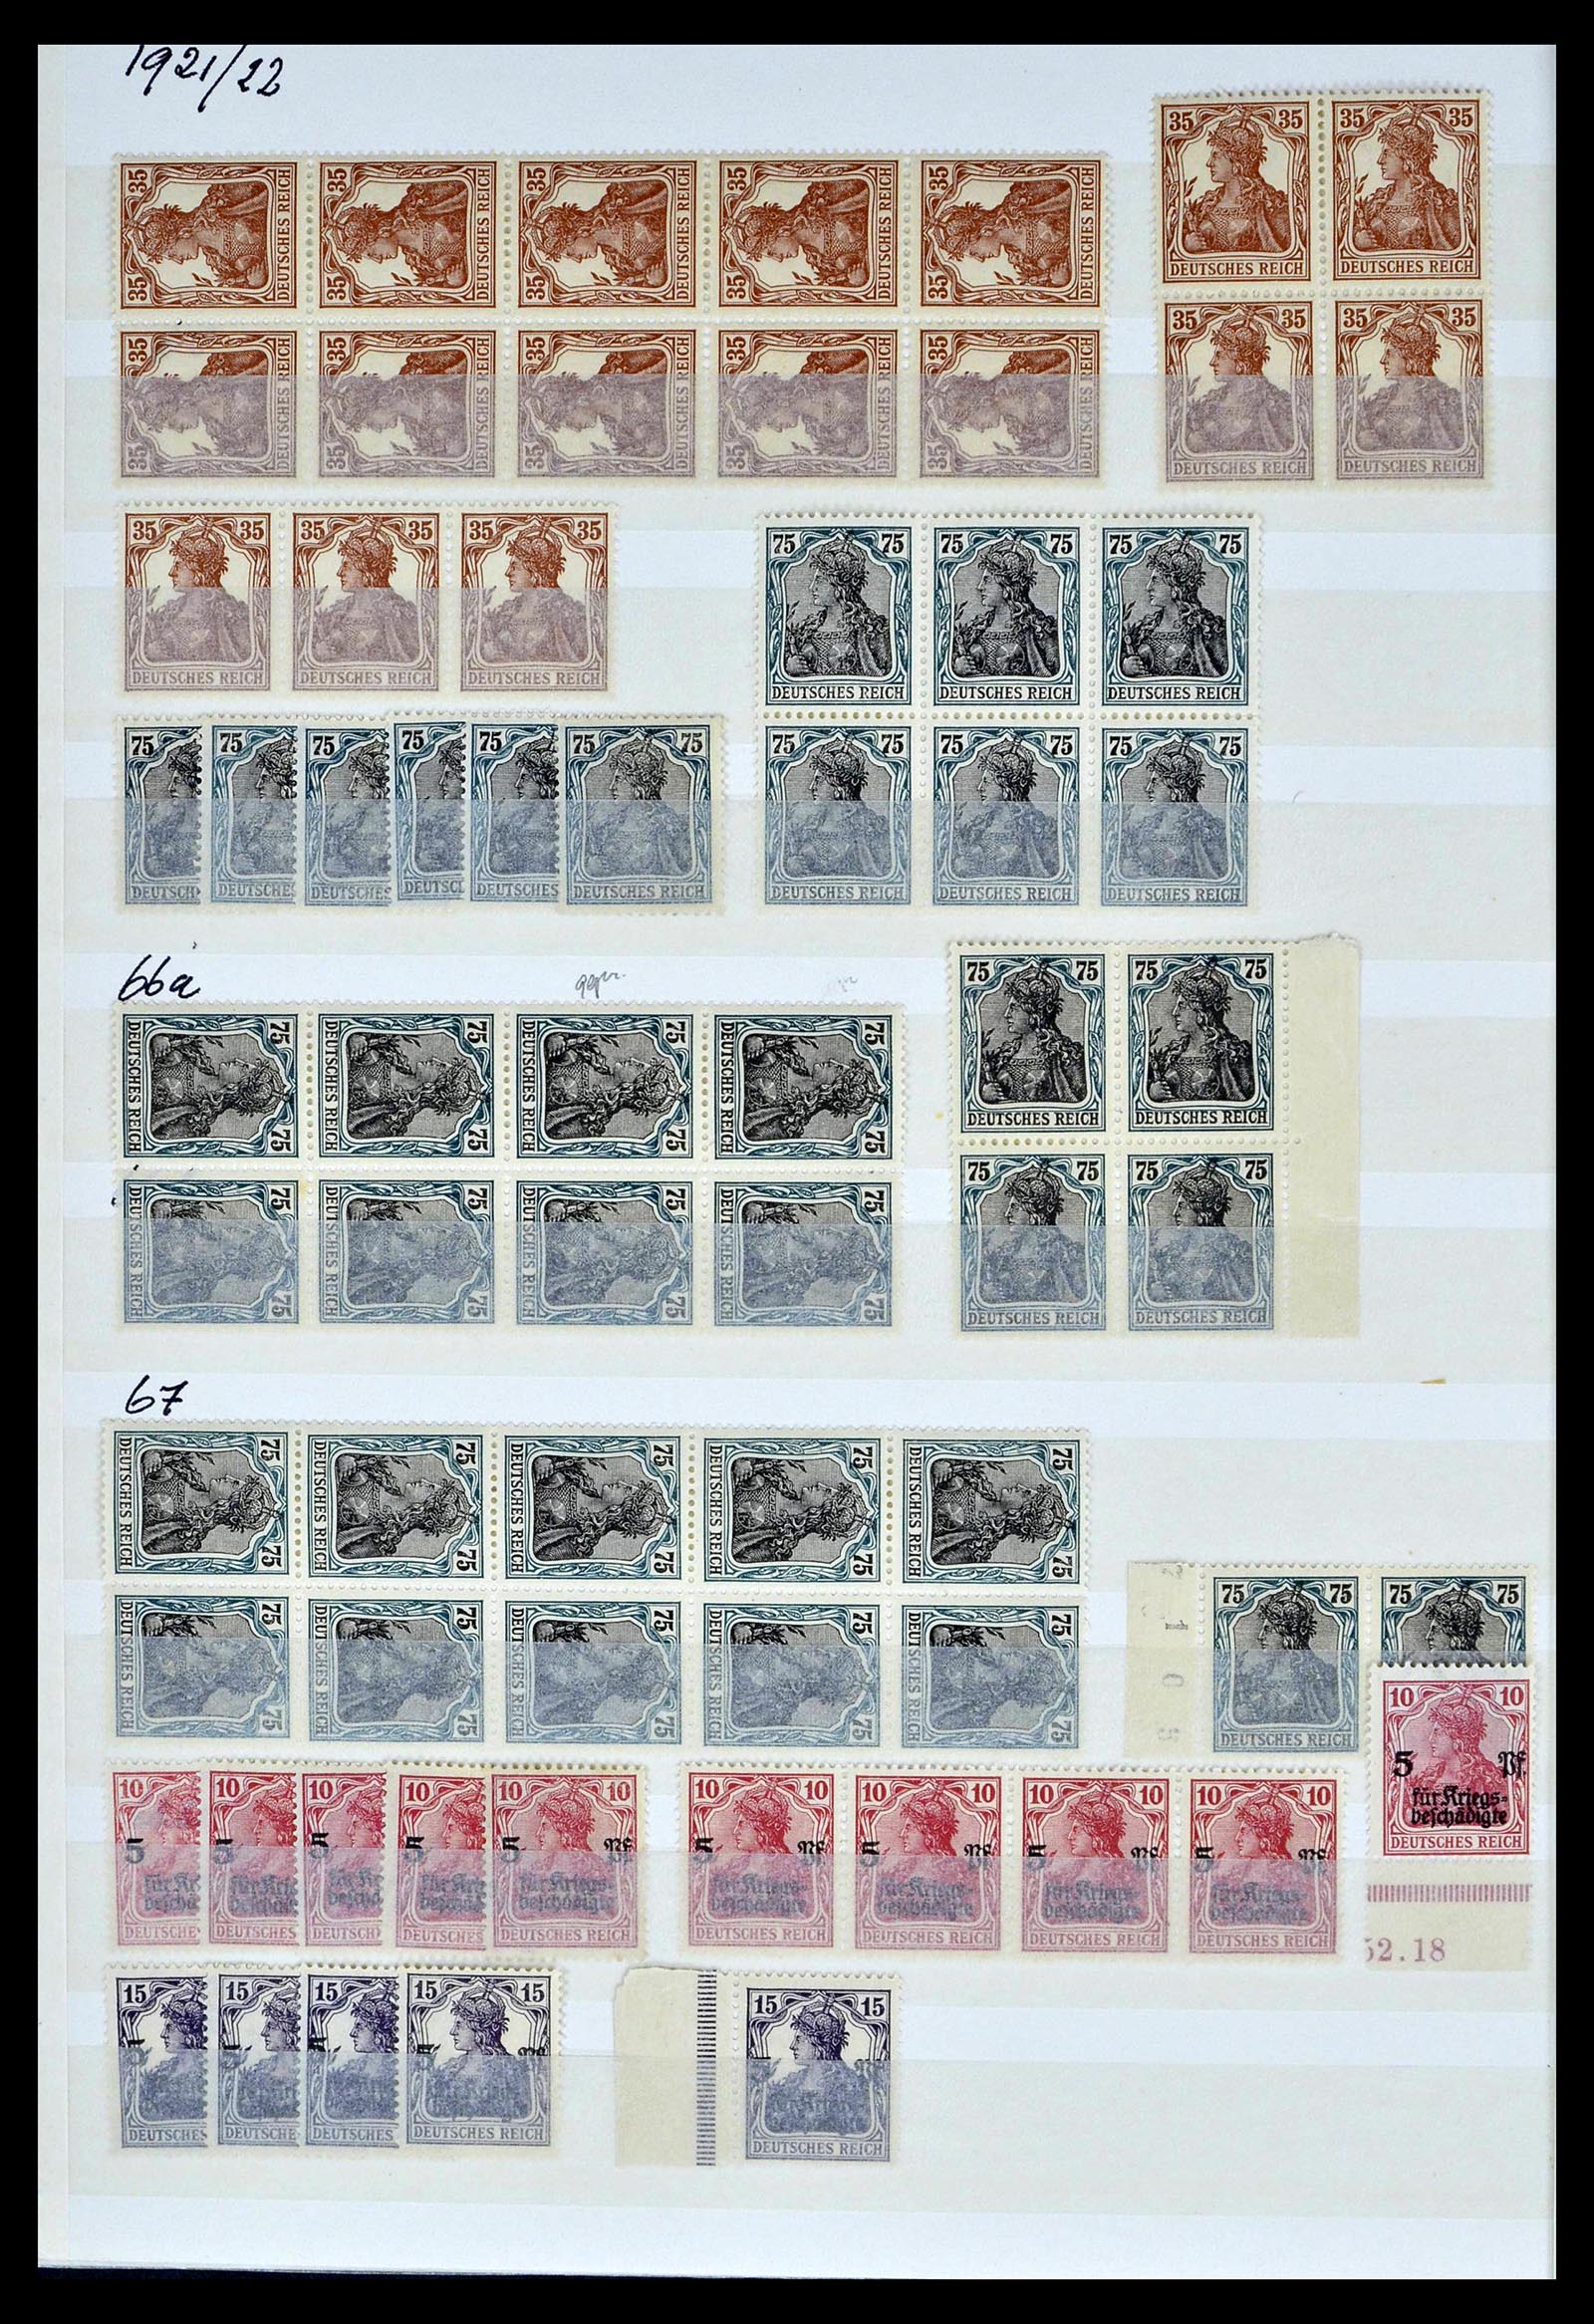 39256 0010 - Stamp collection 39256 German Reich MNH.